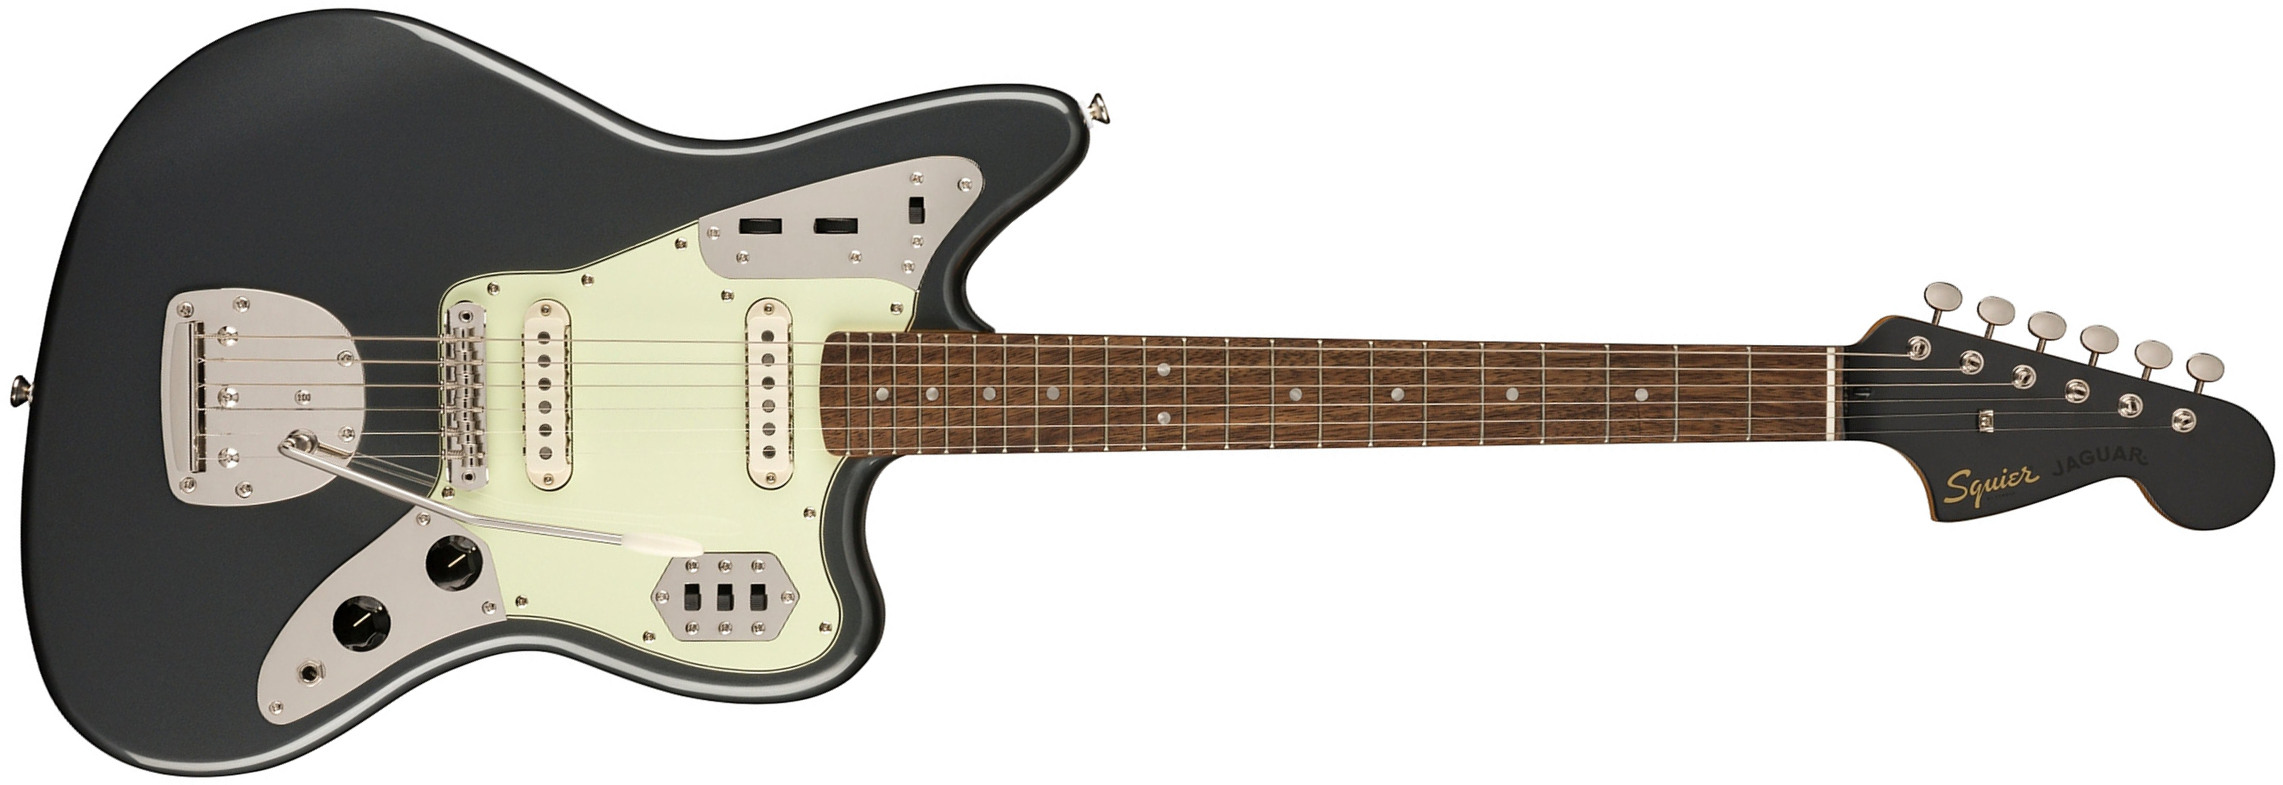 Squier Jaguar 60s Classic Vibe Fsr Ltd 2s Trem Lau - Charcoal Frost Metallic - Guitarra electrica retro rock - Main picture